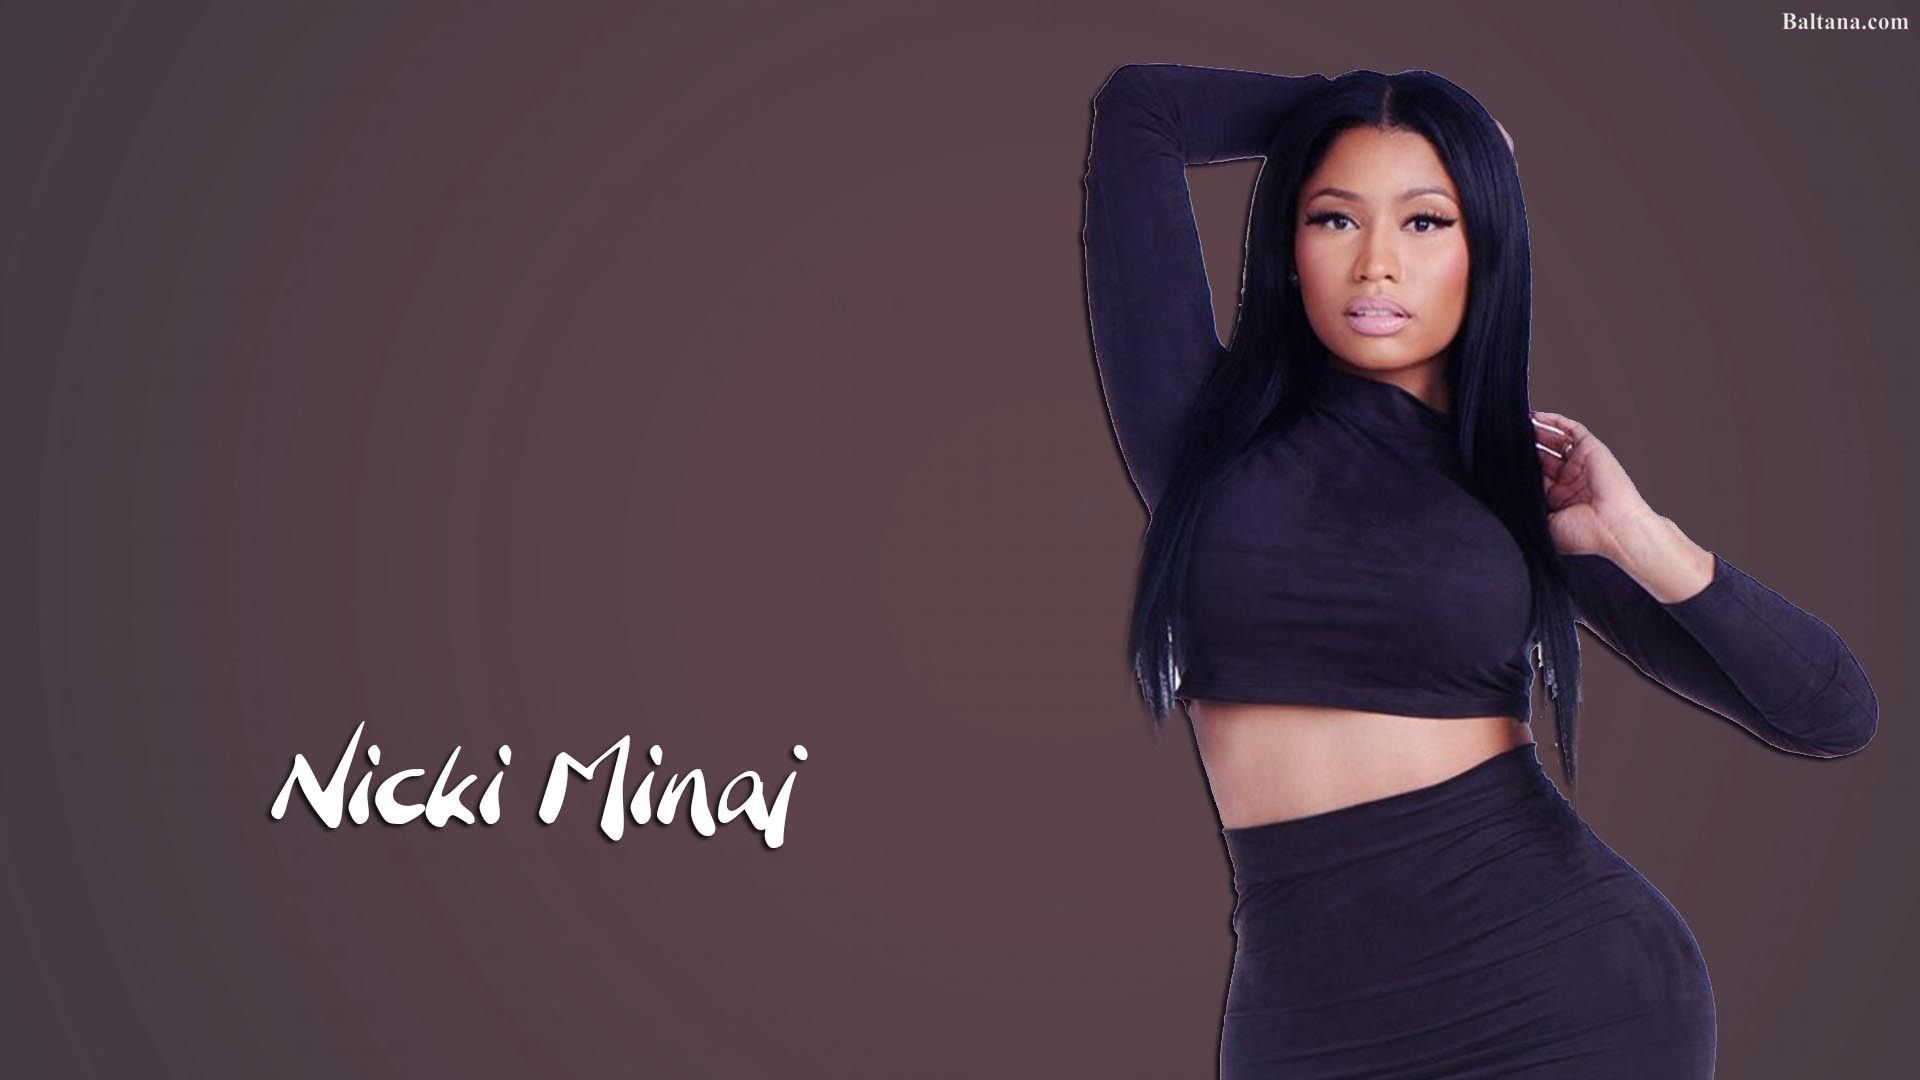 Nicki Minaj Background For Computer .wallpapertip.com